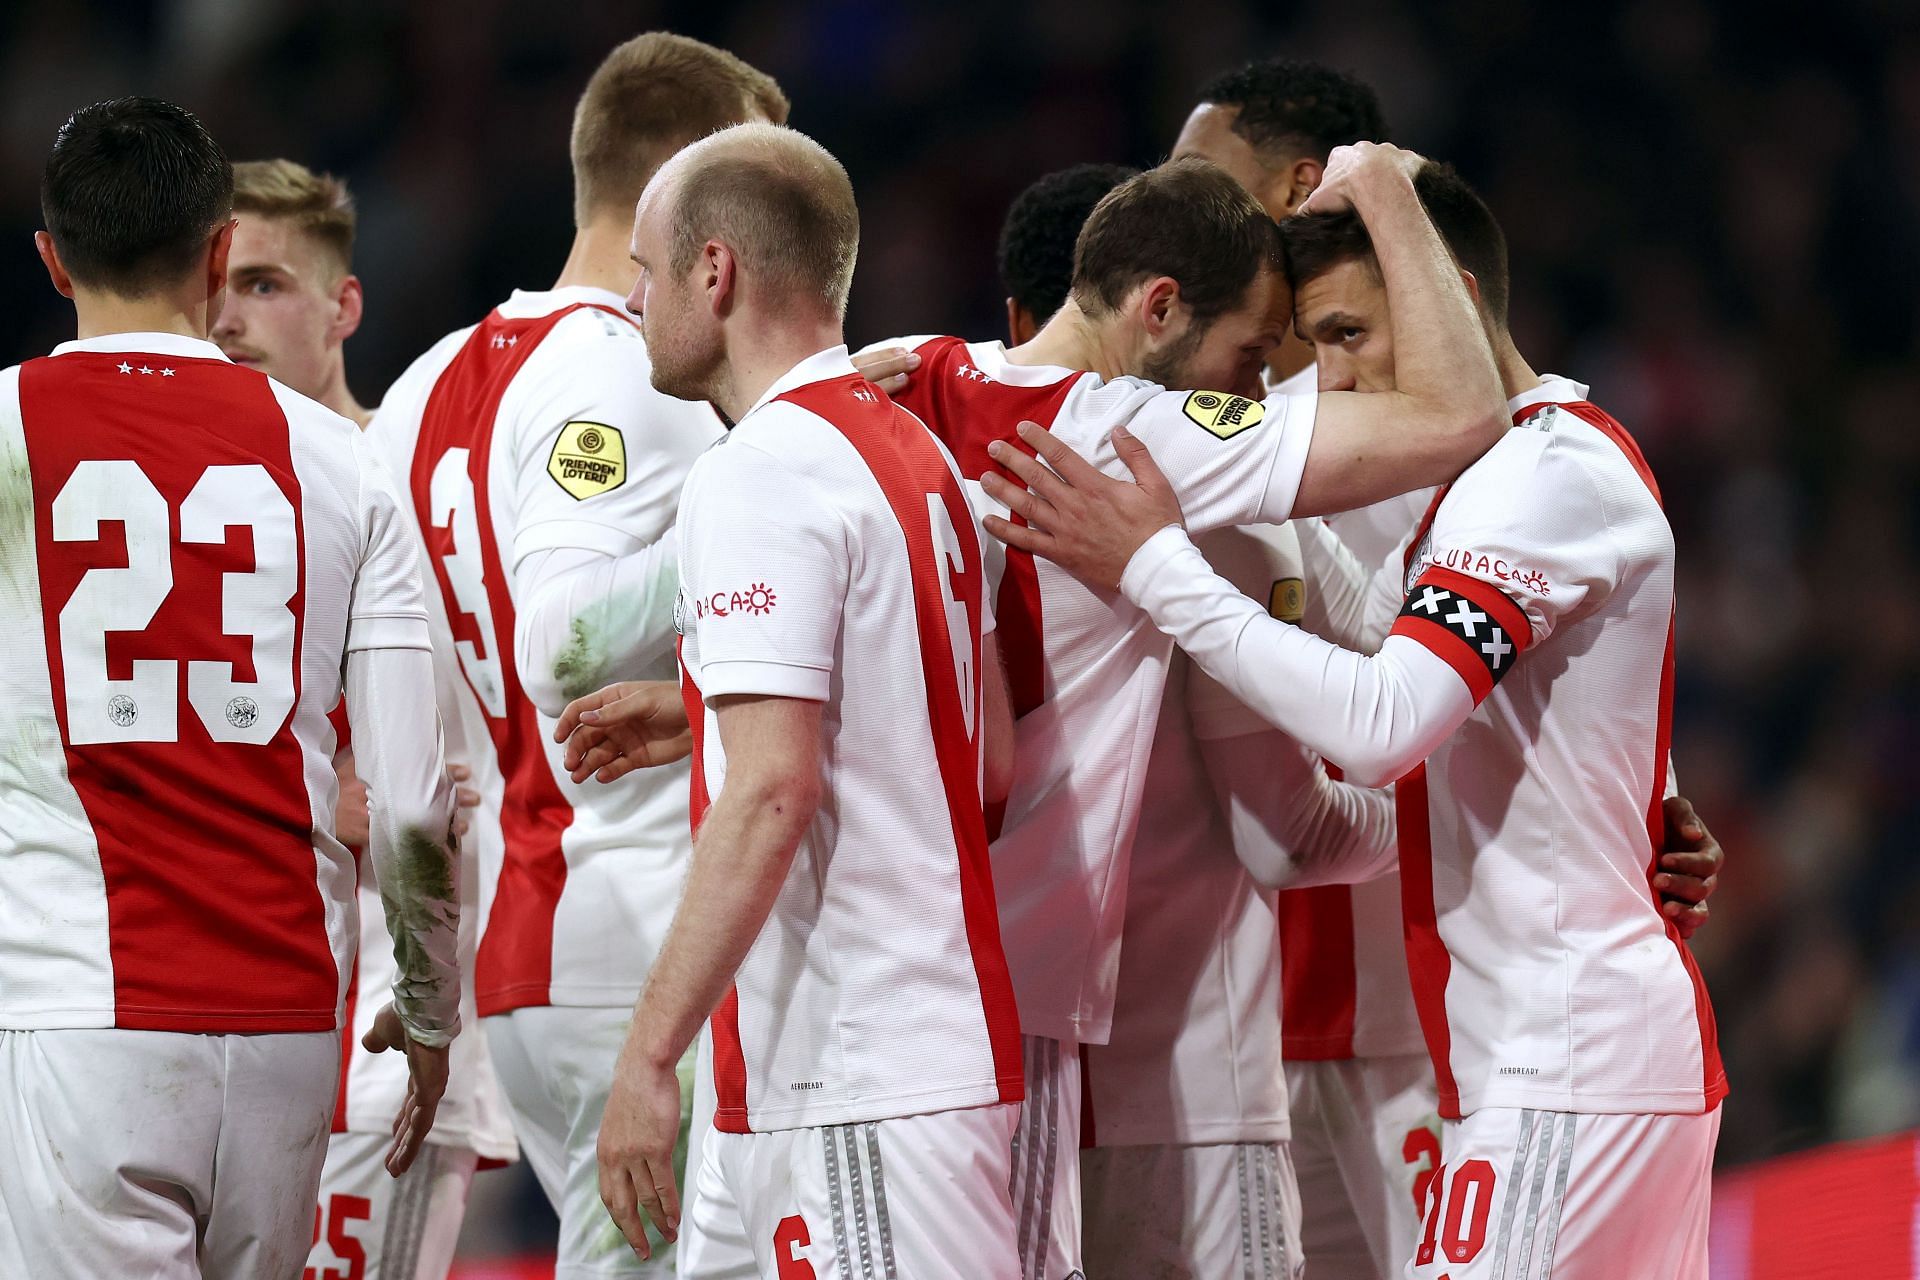 Ajax will host PEC Zwolle on Saturday